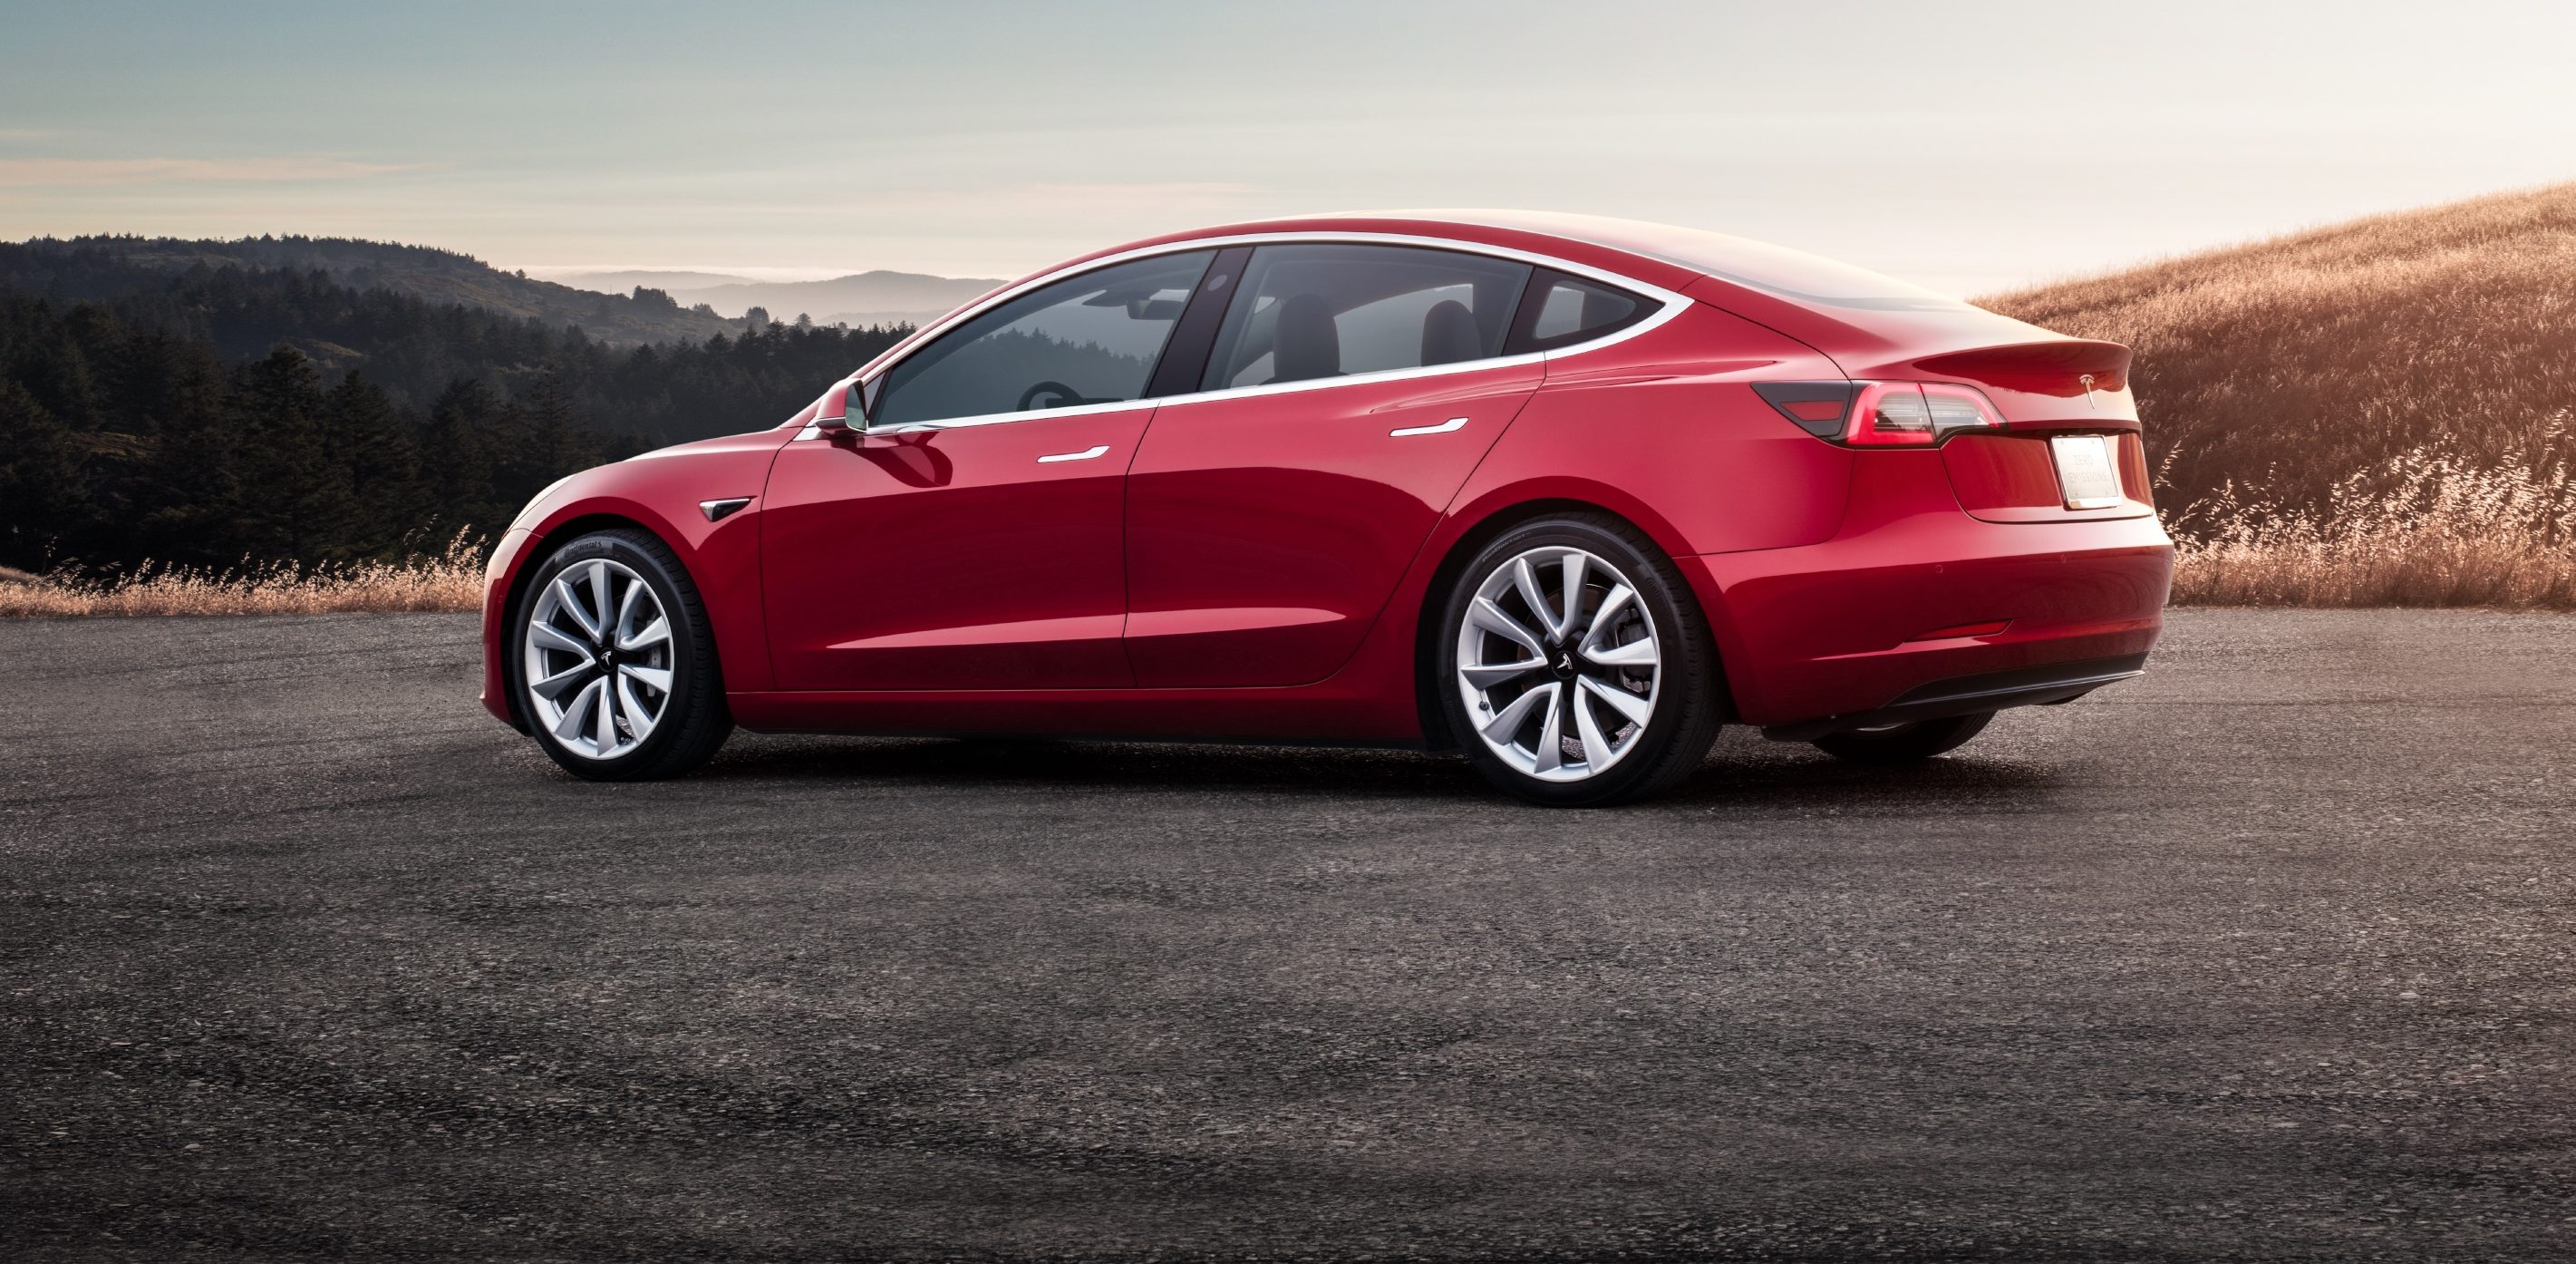 Tesla: - Vi øker ikke prisene før i morgen